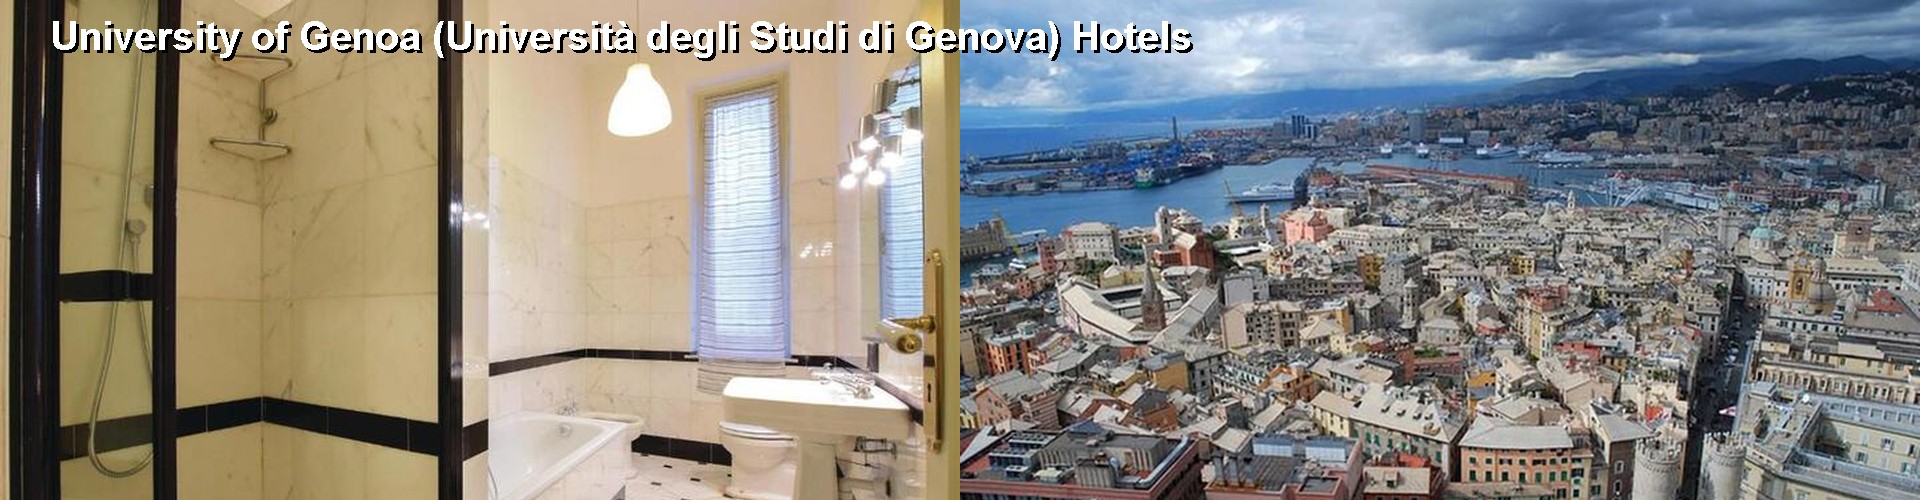 5 Best Hotels near University of Genoa (Università degli Studi di Genova)